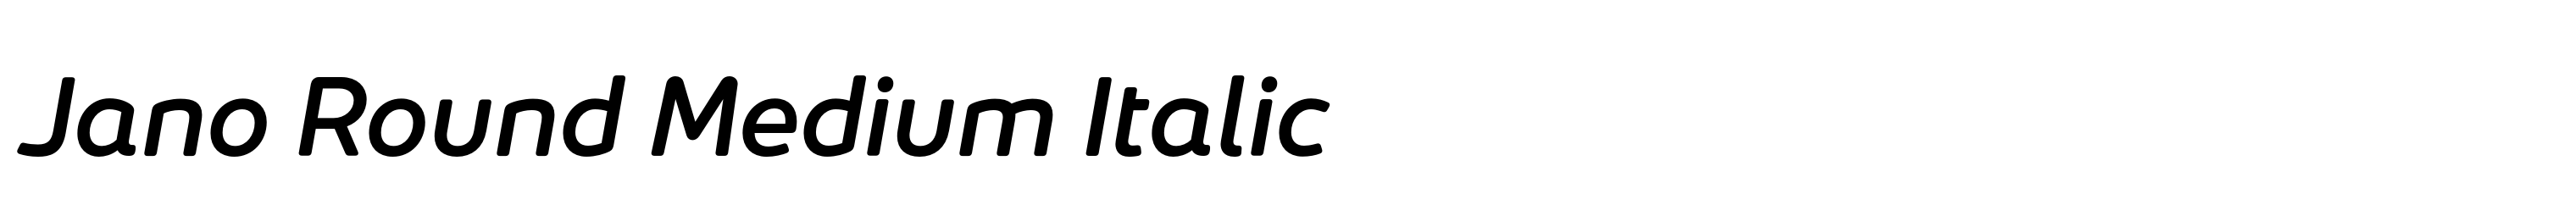 Jano Round Medium Italic